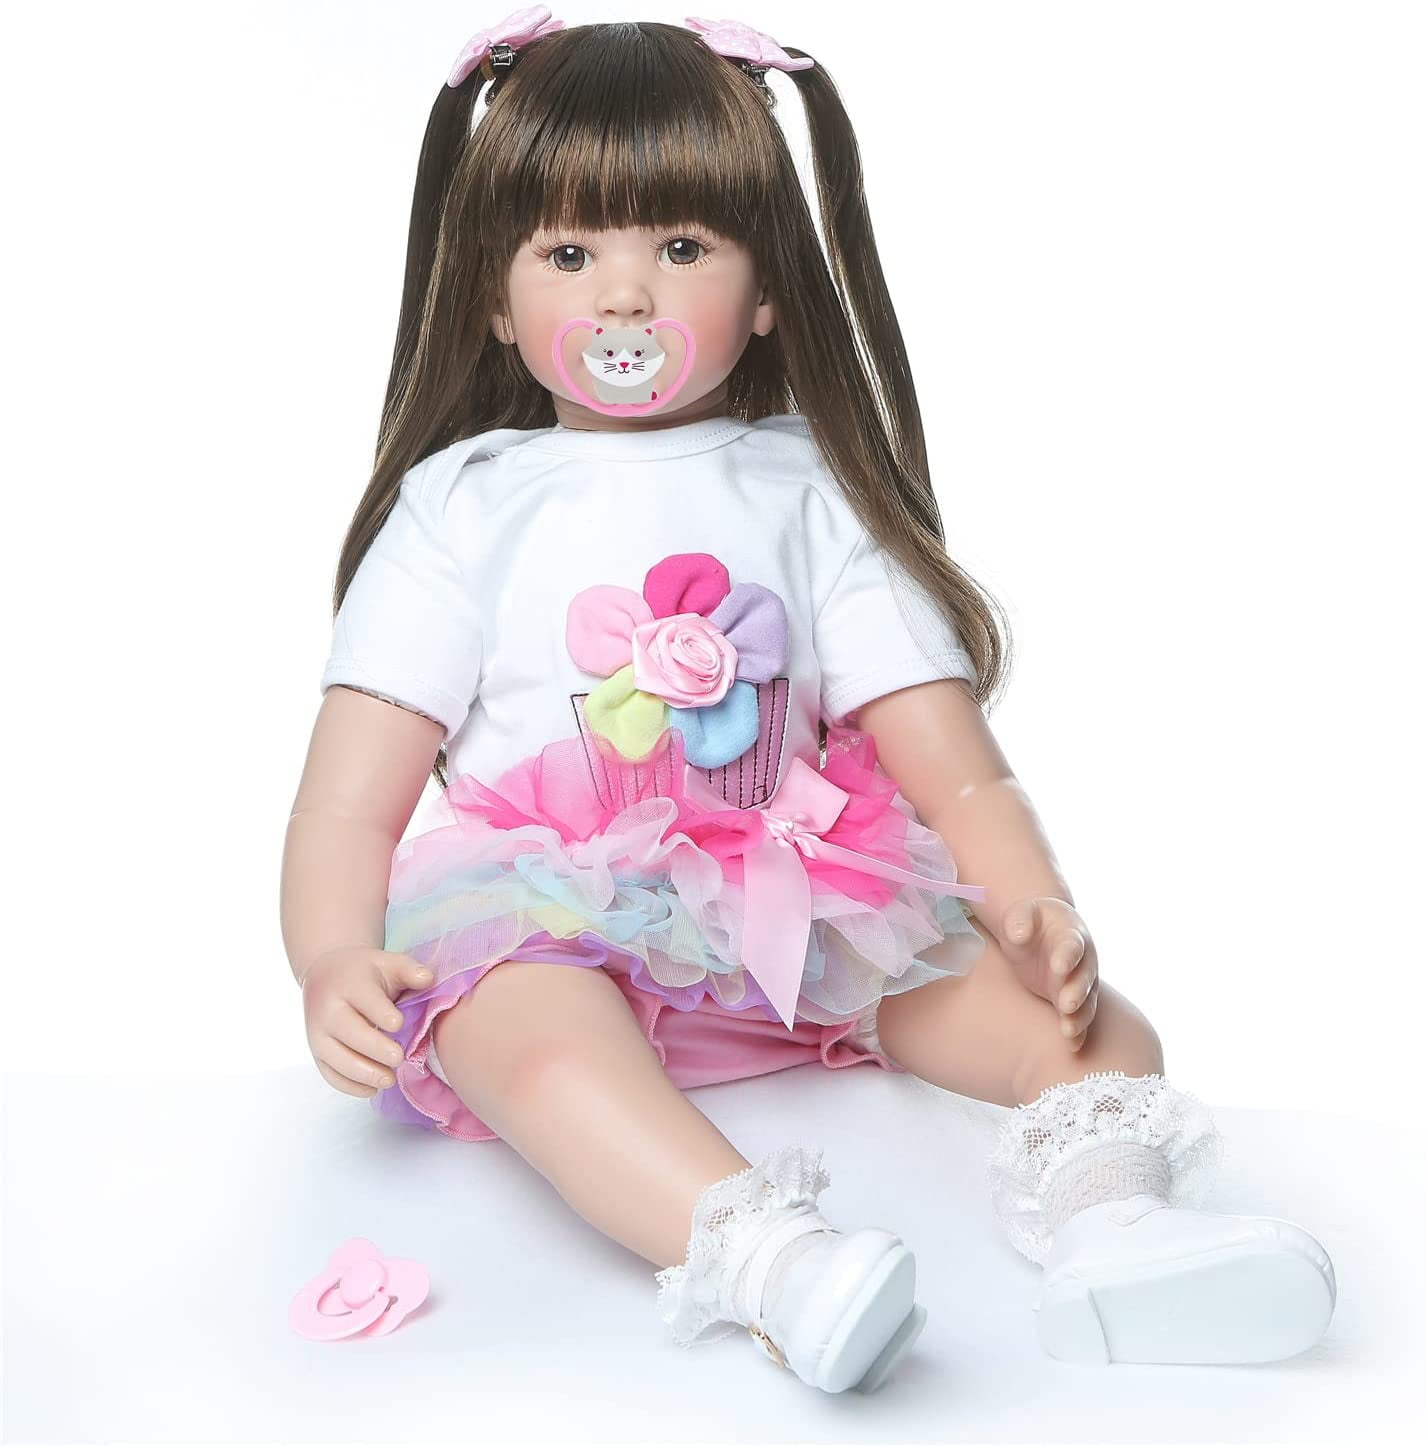 24" Reborn Baby Girl Toddler Handmade Dolls Soft Vinyl Silicone Vivid Toys Gifts 